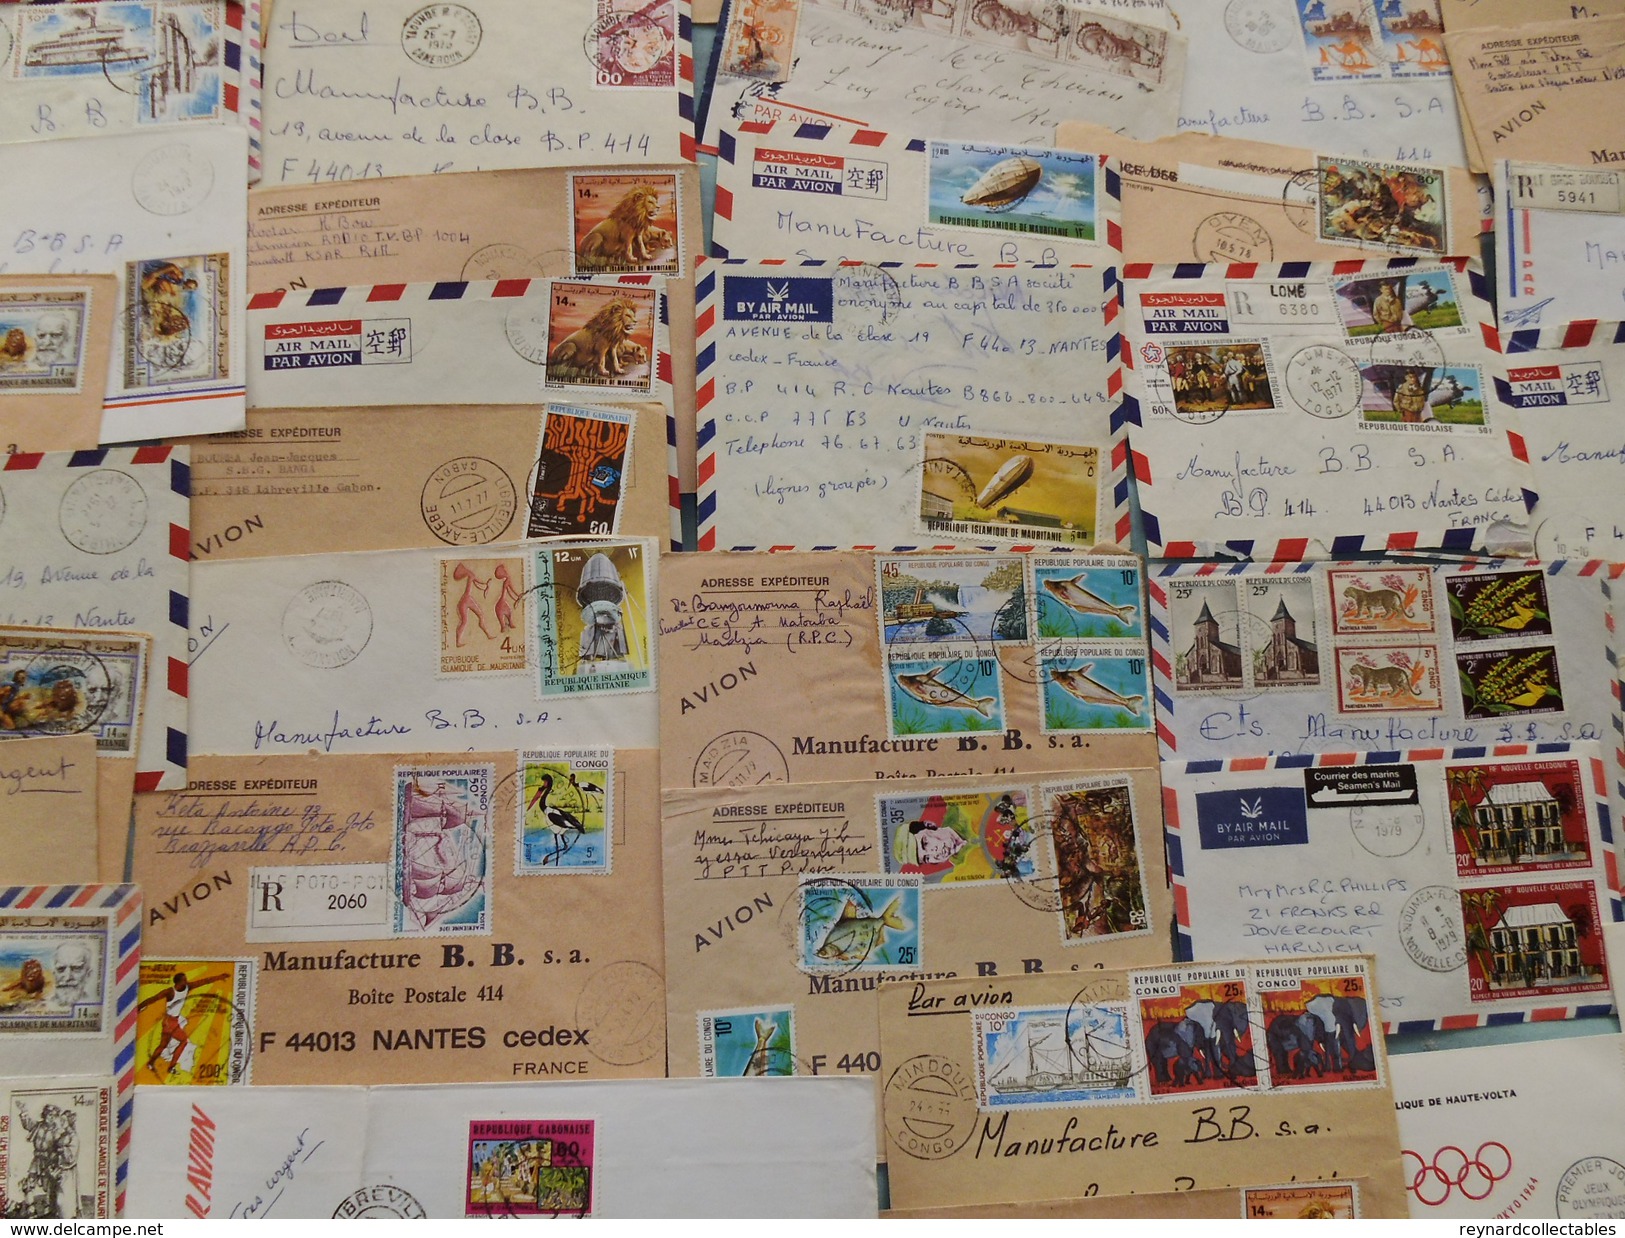 France & former Colonies, cover lot (150). Mauritania, Gabon, Tchad,Algeria ,N.Caledonia+ France covers inc Art blocks++